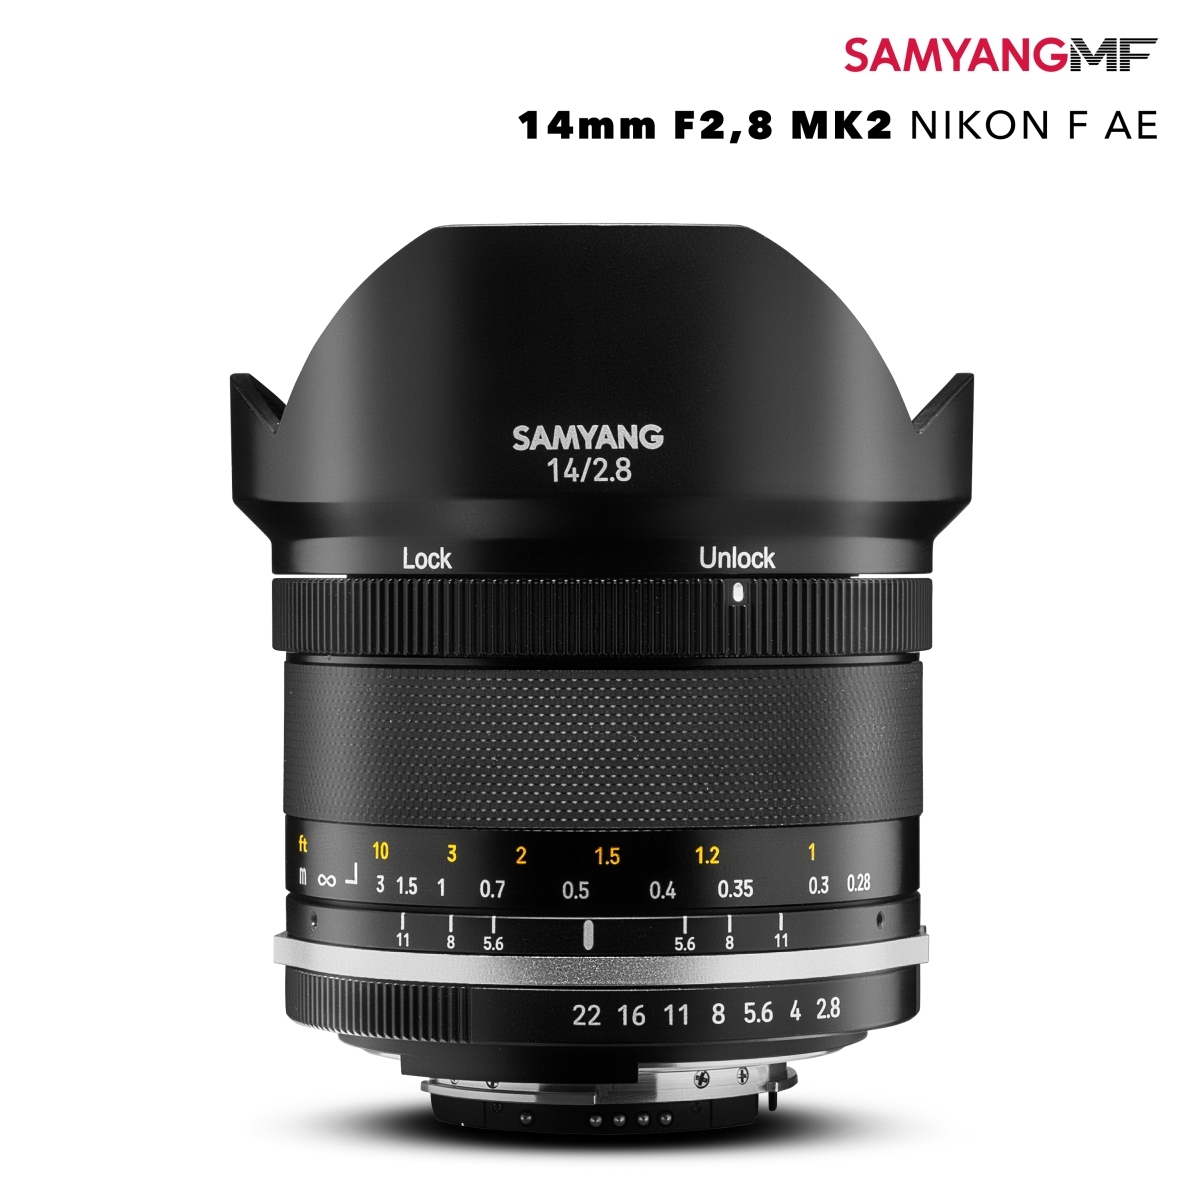 Samyang MF 14mm F2.8 MK2 Nikon F AE